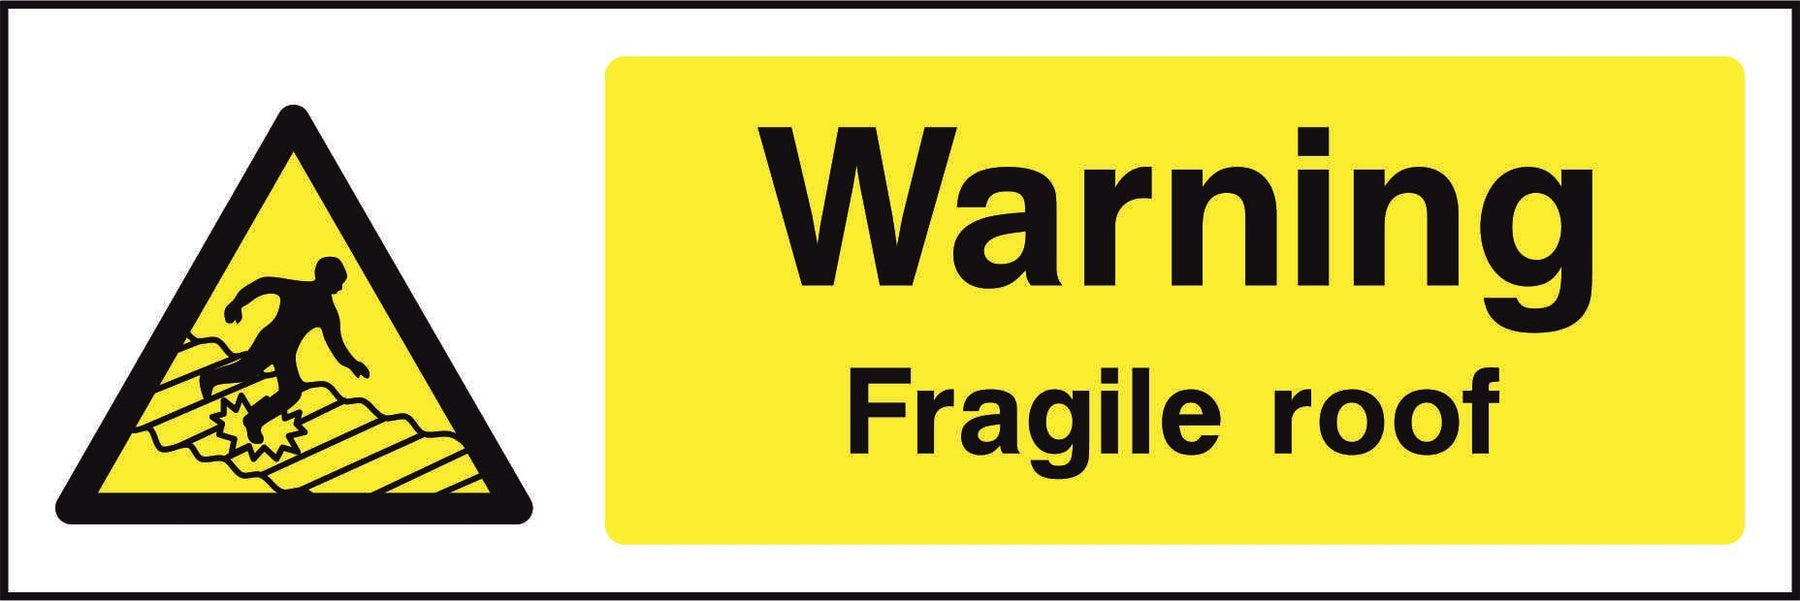 Warning Fragile roof